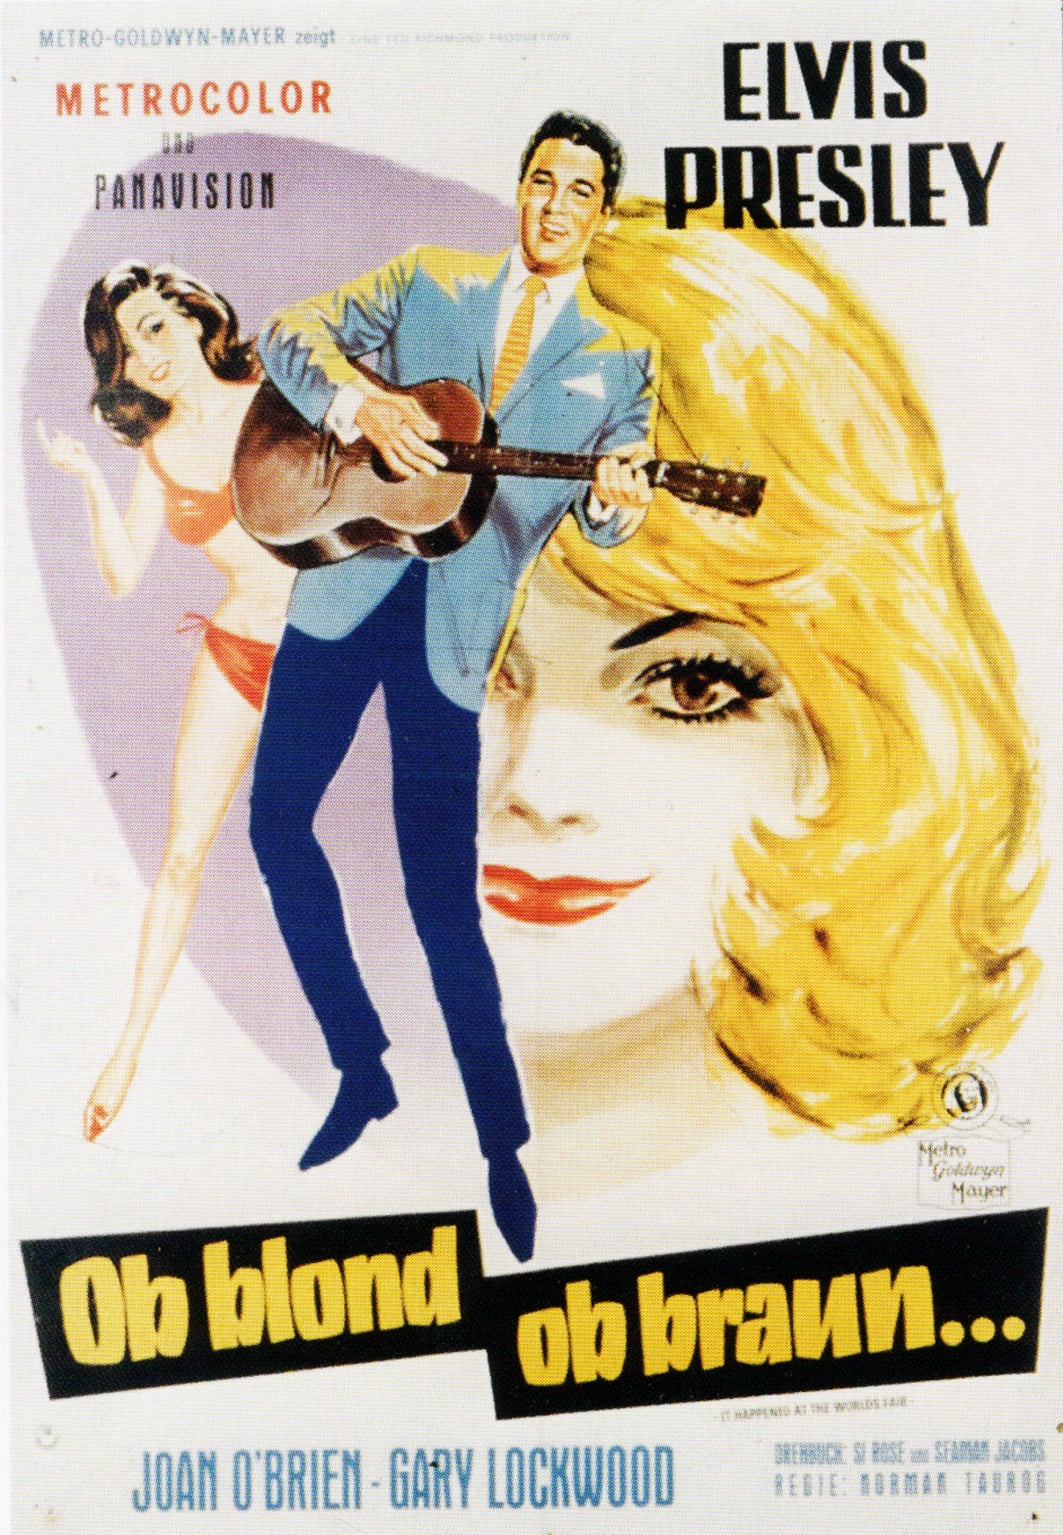 Plakat von "Ob blond, ob braun"